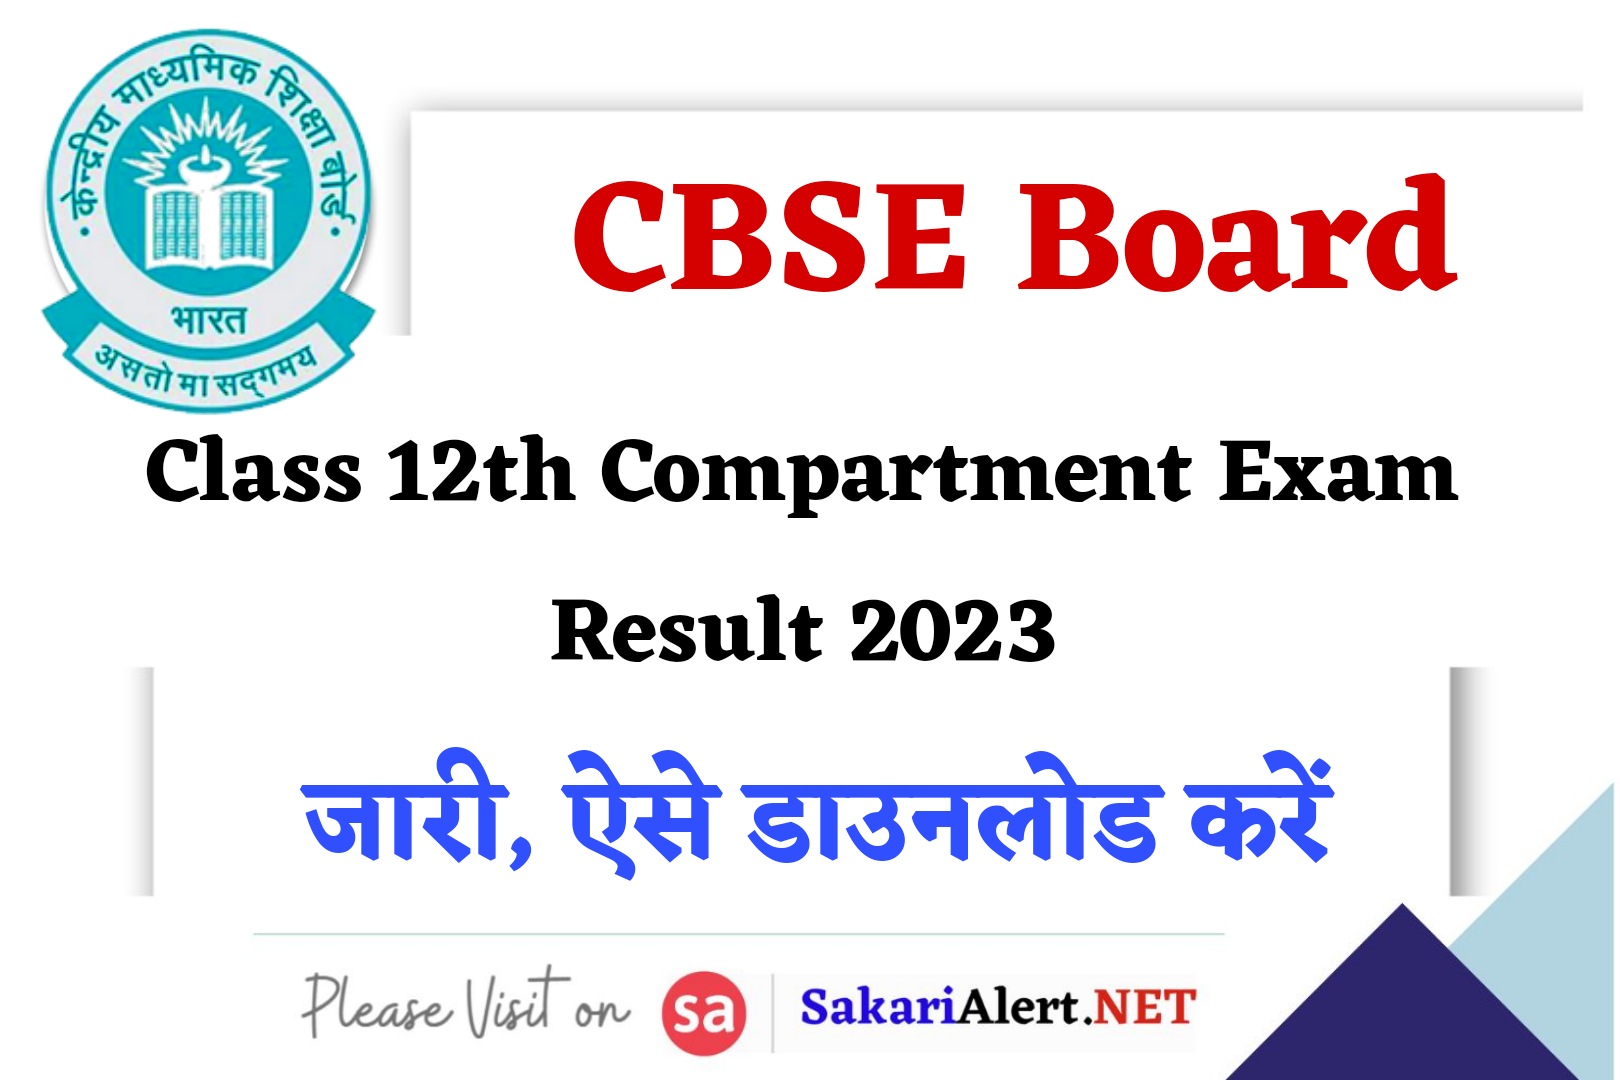 CBSE Board Class 12th Compartment Exam Result 2023